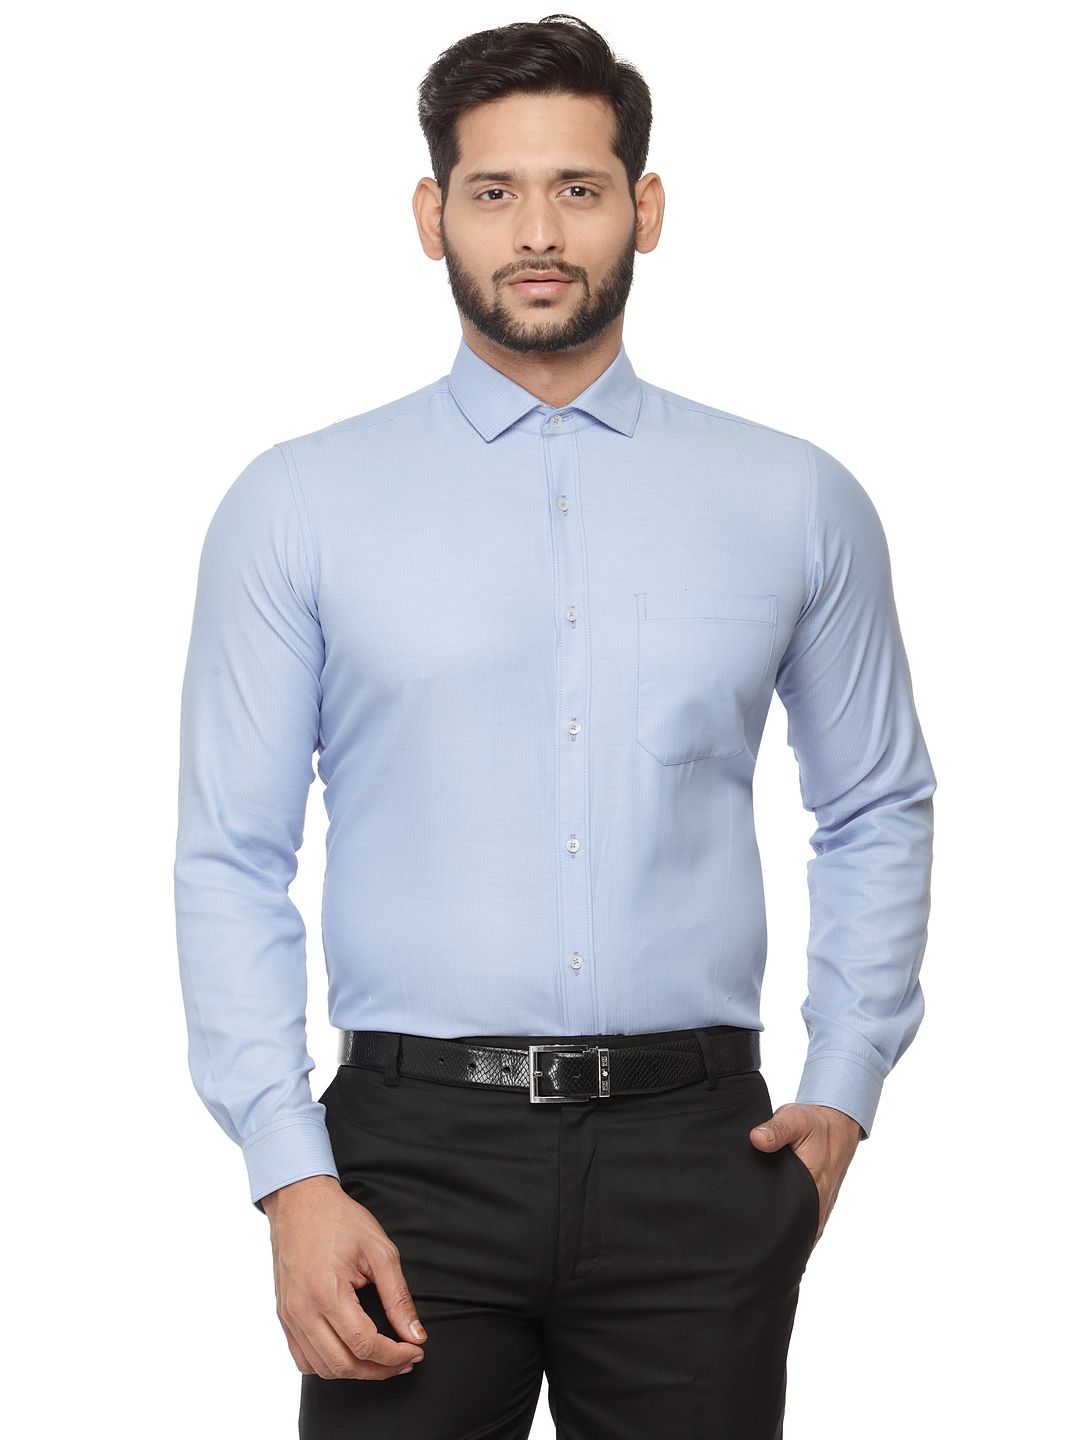 Sanskar Menswear Formal Shirt Sky